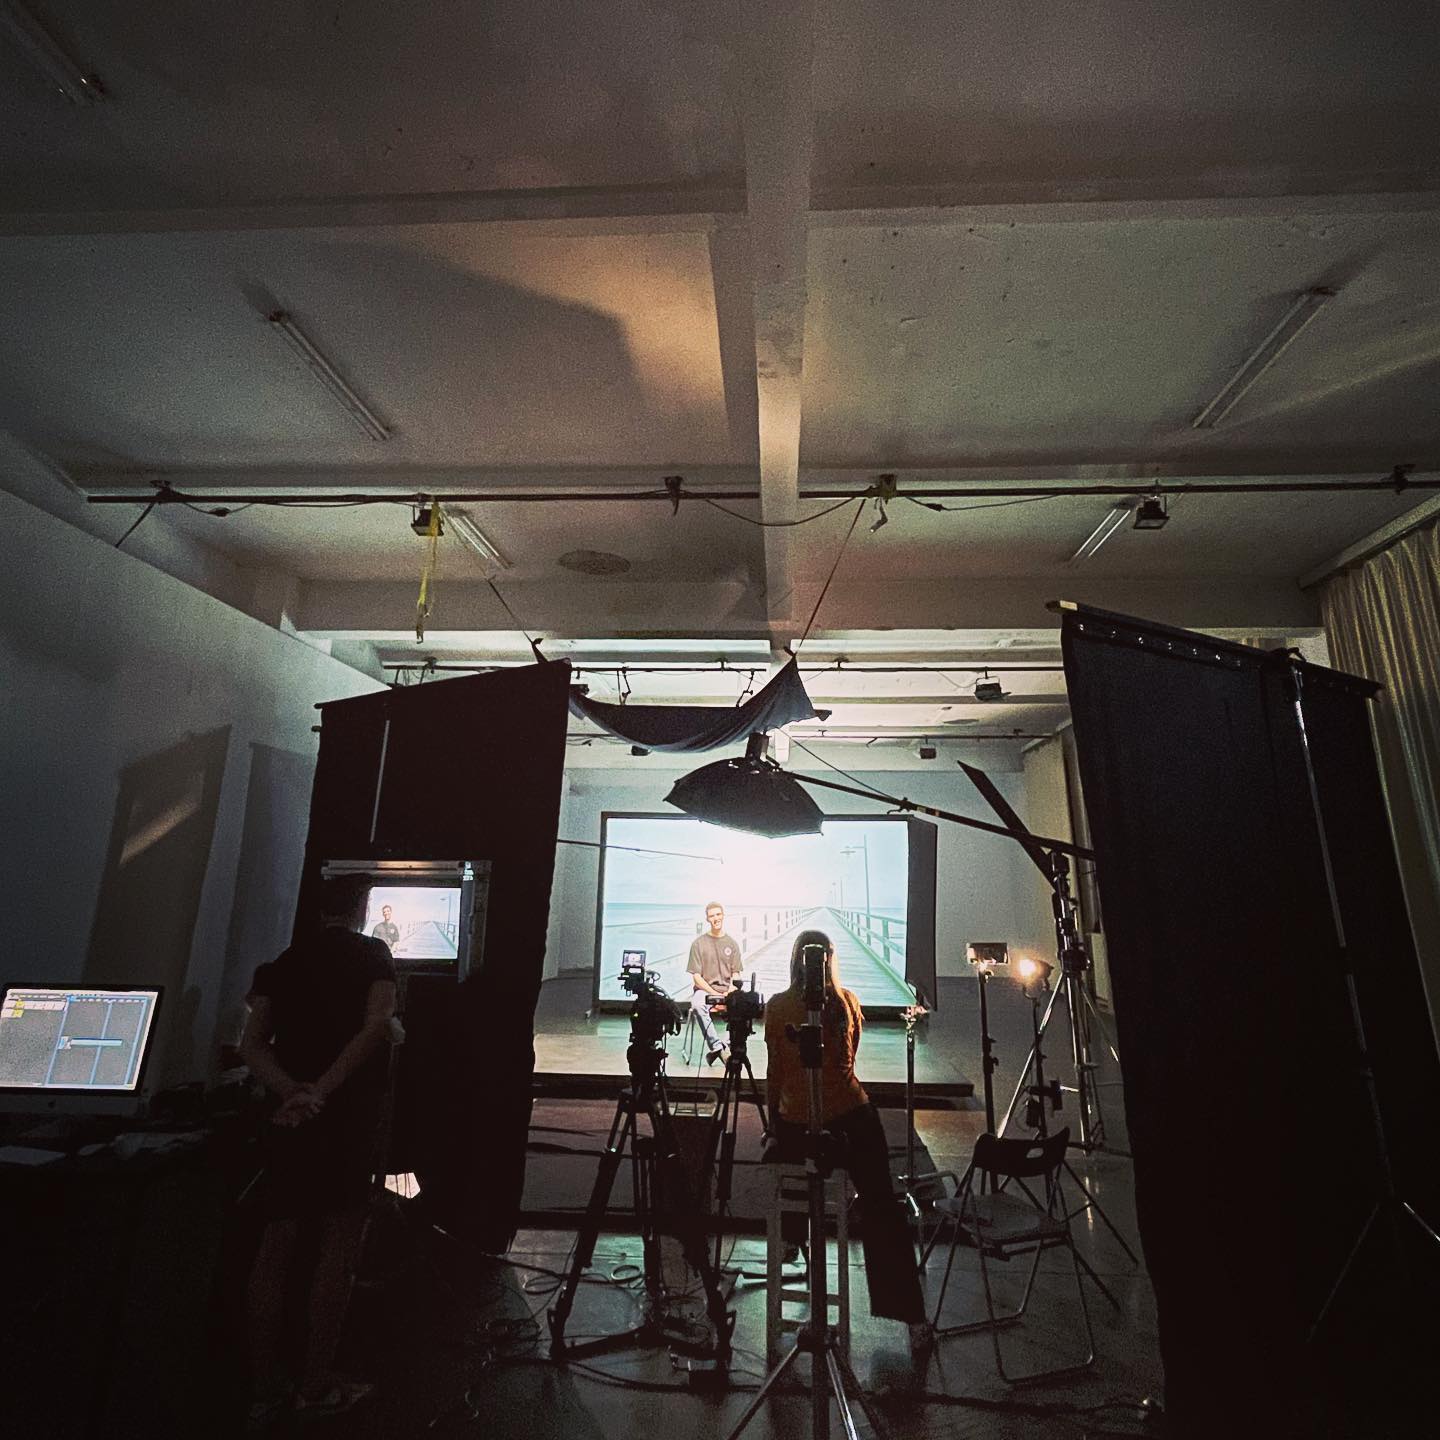 Director @tripp_tina and her team at 2nd studioshoot for The last of Us #studioshooting #rückprojektion #thelastofusdocumentary #thelastofus #documentaryfilm #documentaryfilmmaking #inselusedom #zdfkleinesfernsehspiel